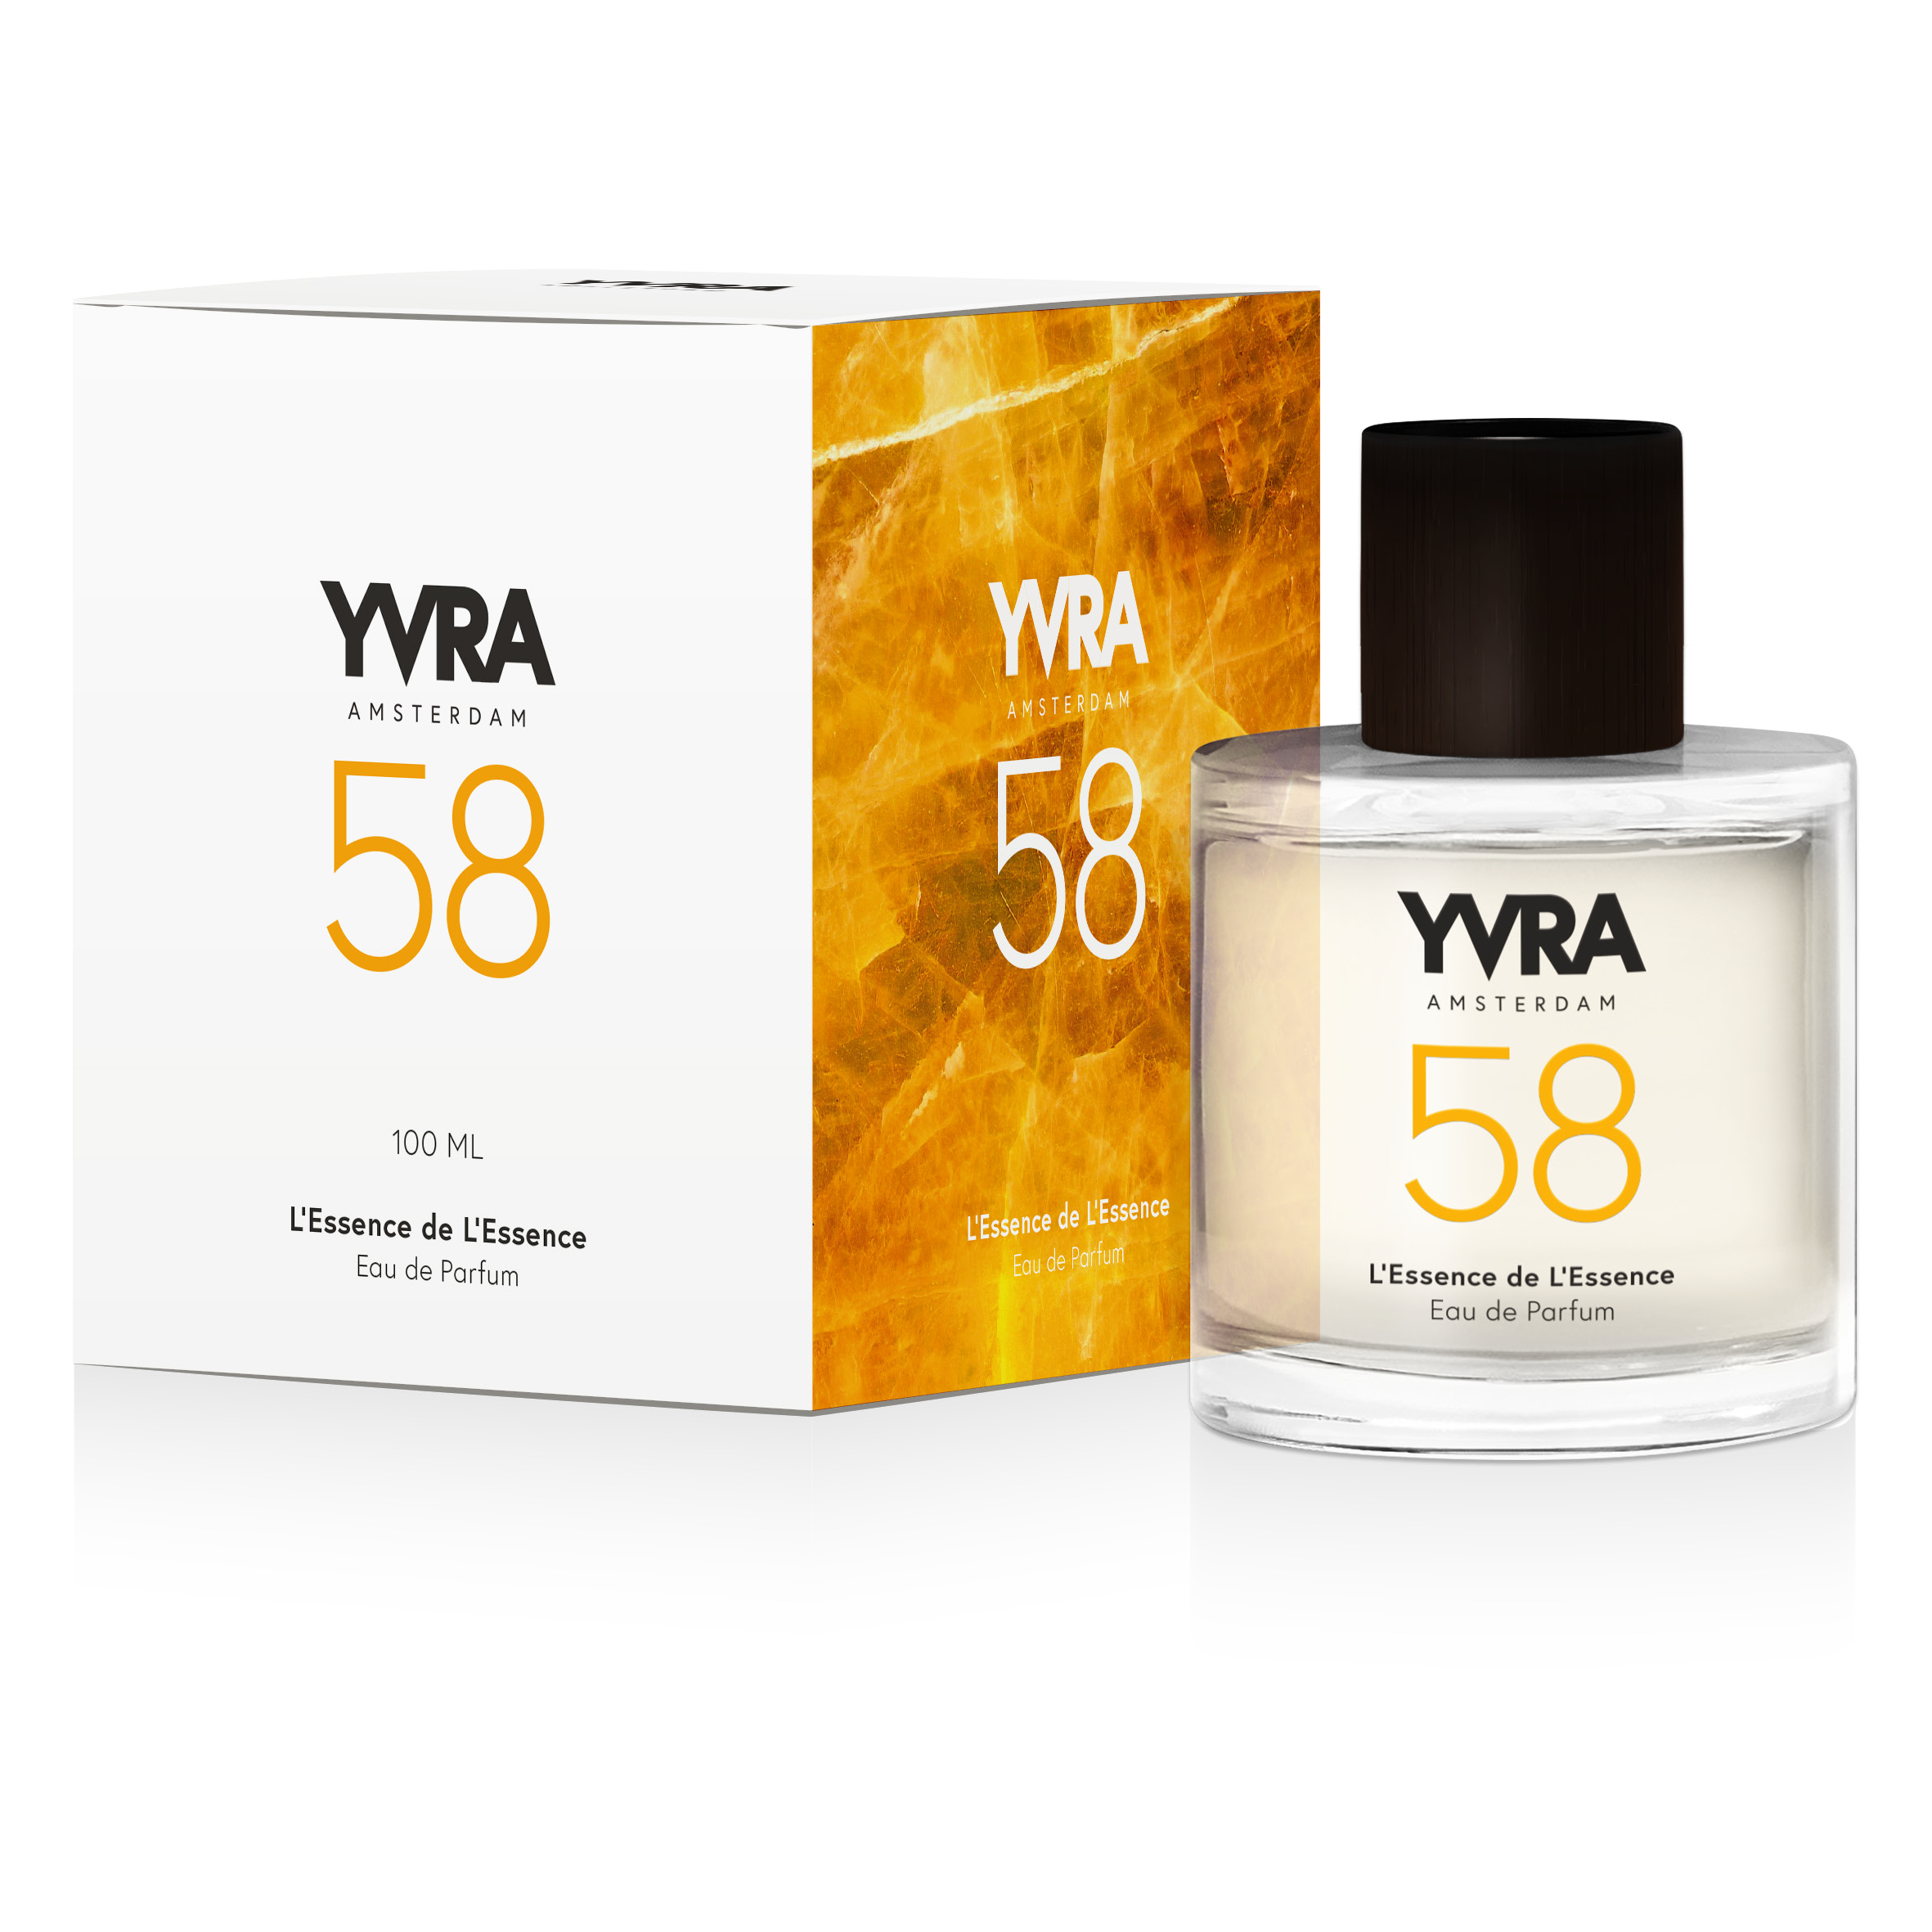 Yvra 58 | eau de parfum